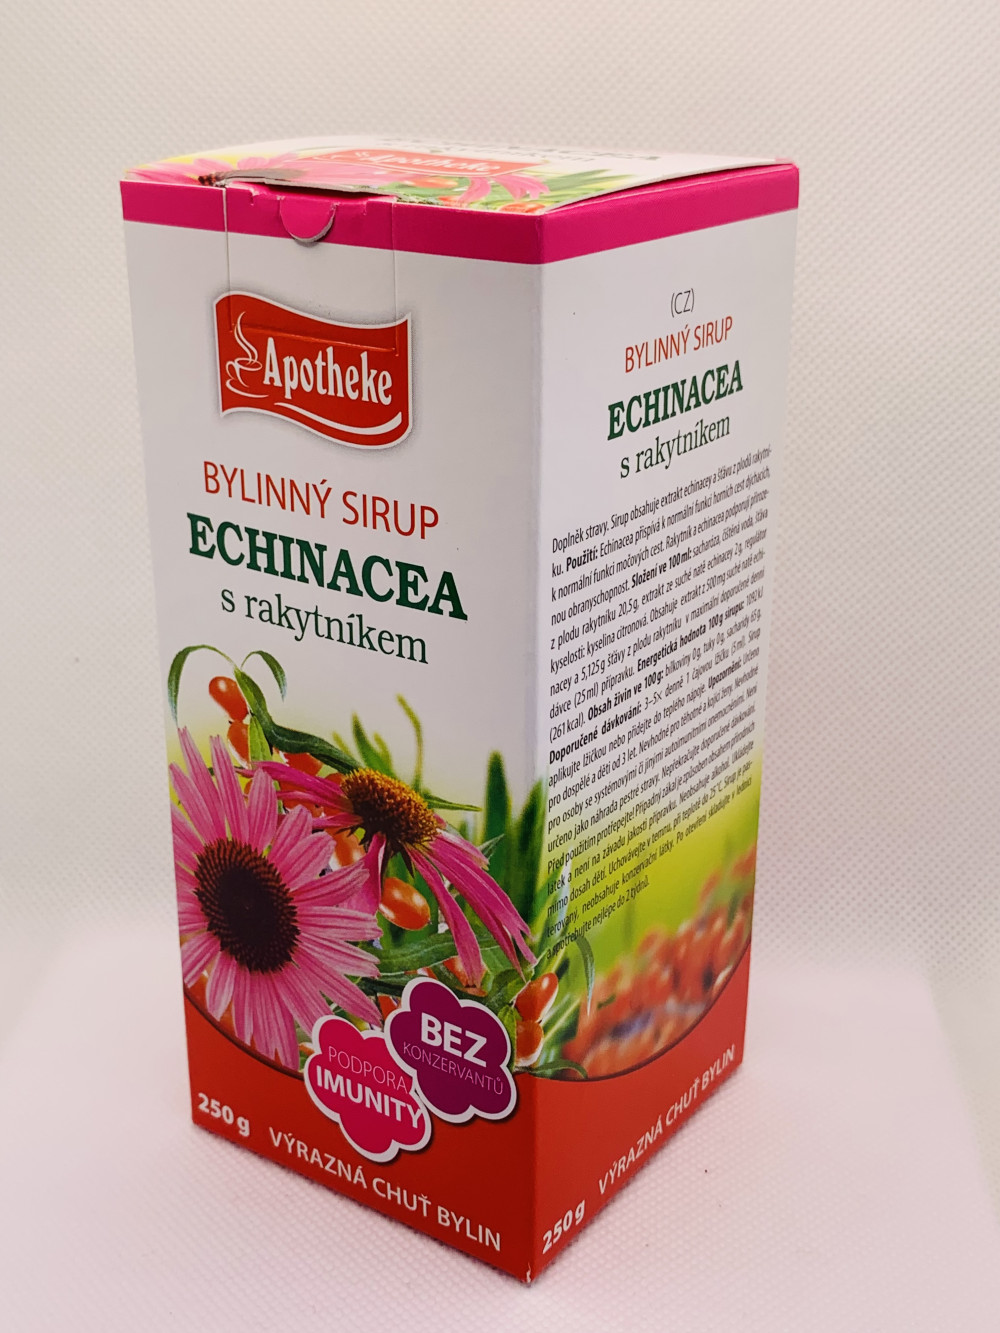 Apotheke - ImmuCare Herbal Tea Echinaceaval, Ginkgoval és Homoktövissel, 20 filter